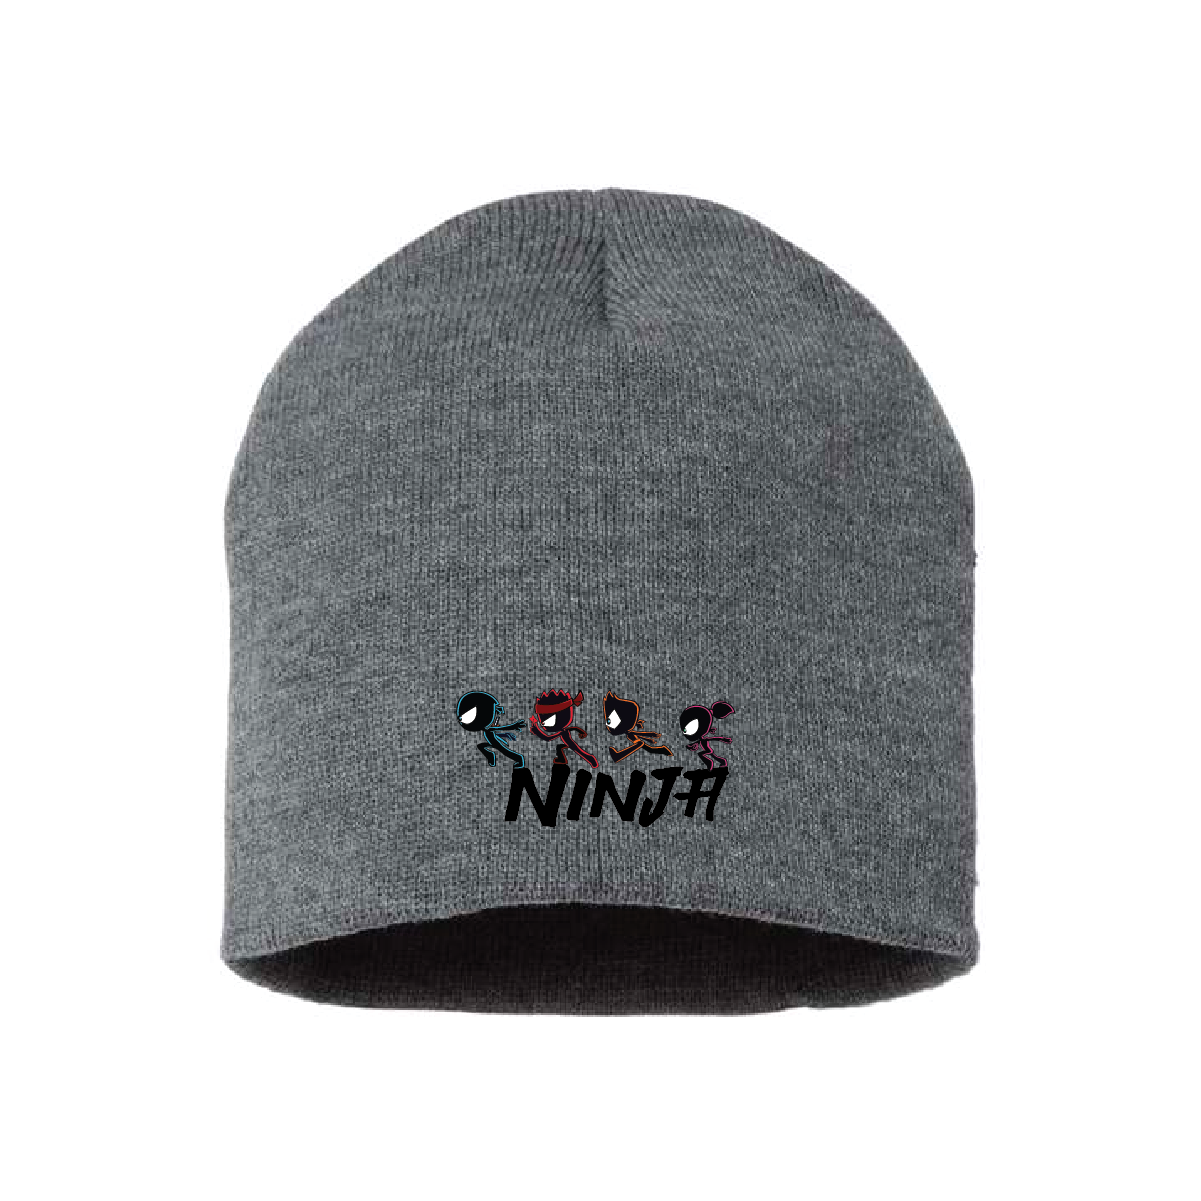 Knit Beanie - Ninja Run ©